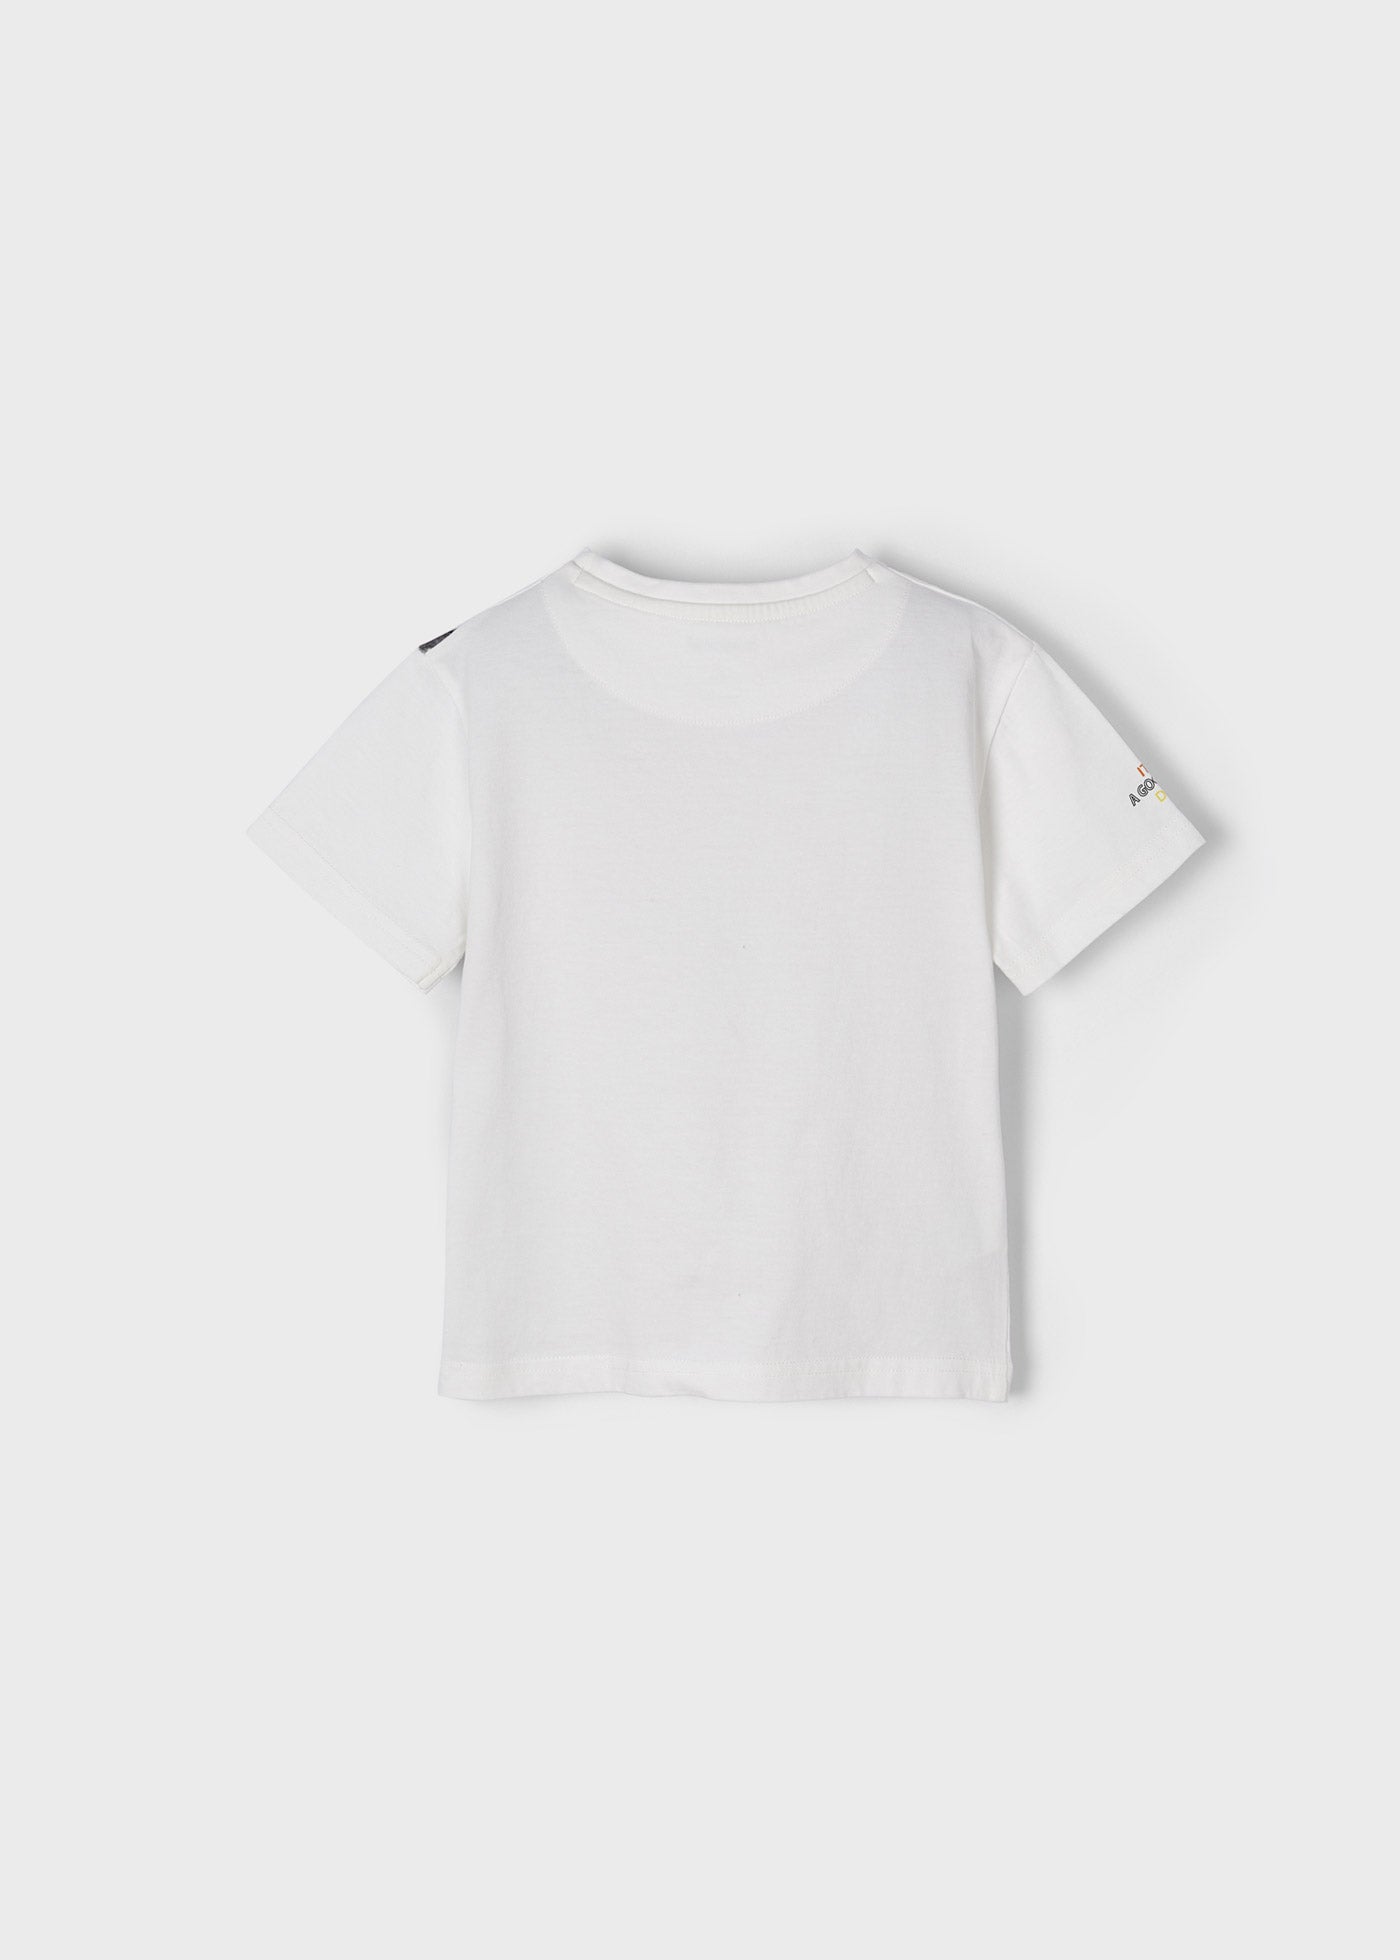 Mayoral Mini T-Shirt w/Animal Graphic _Off White 3003-37